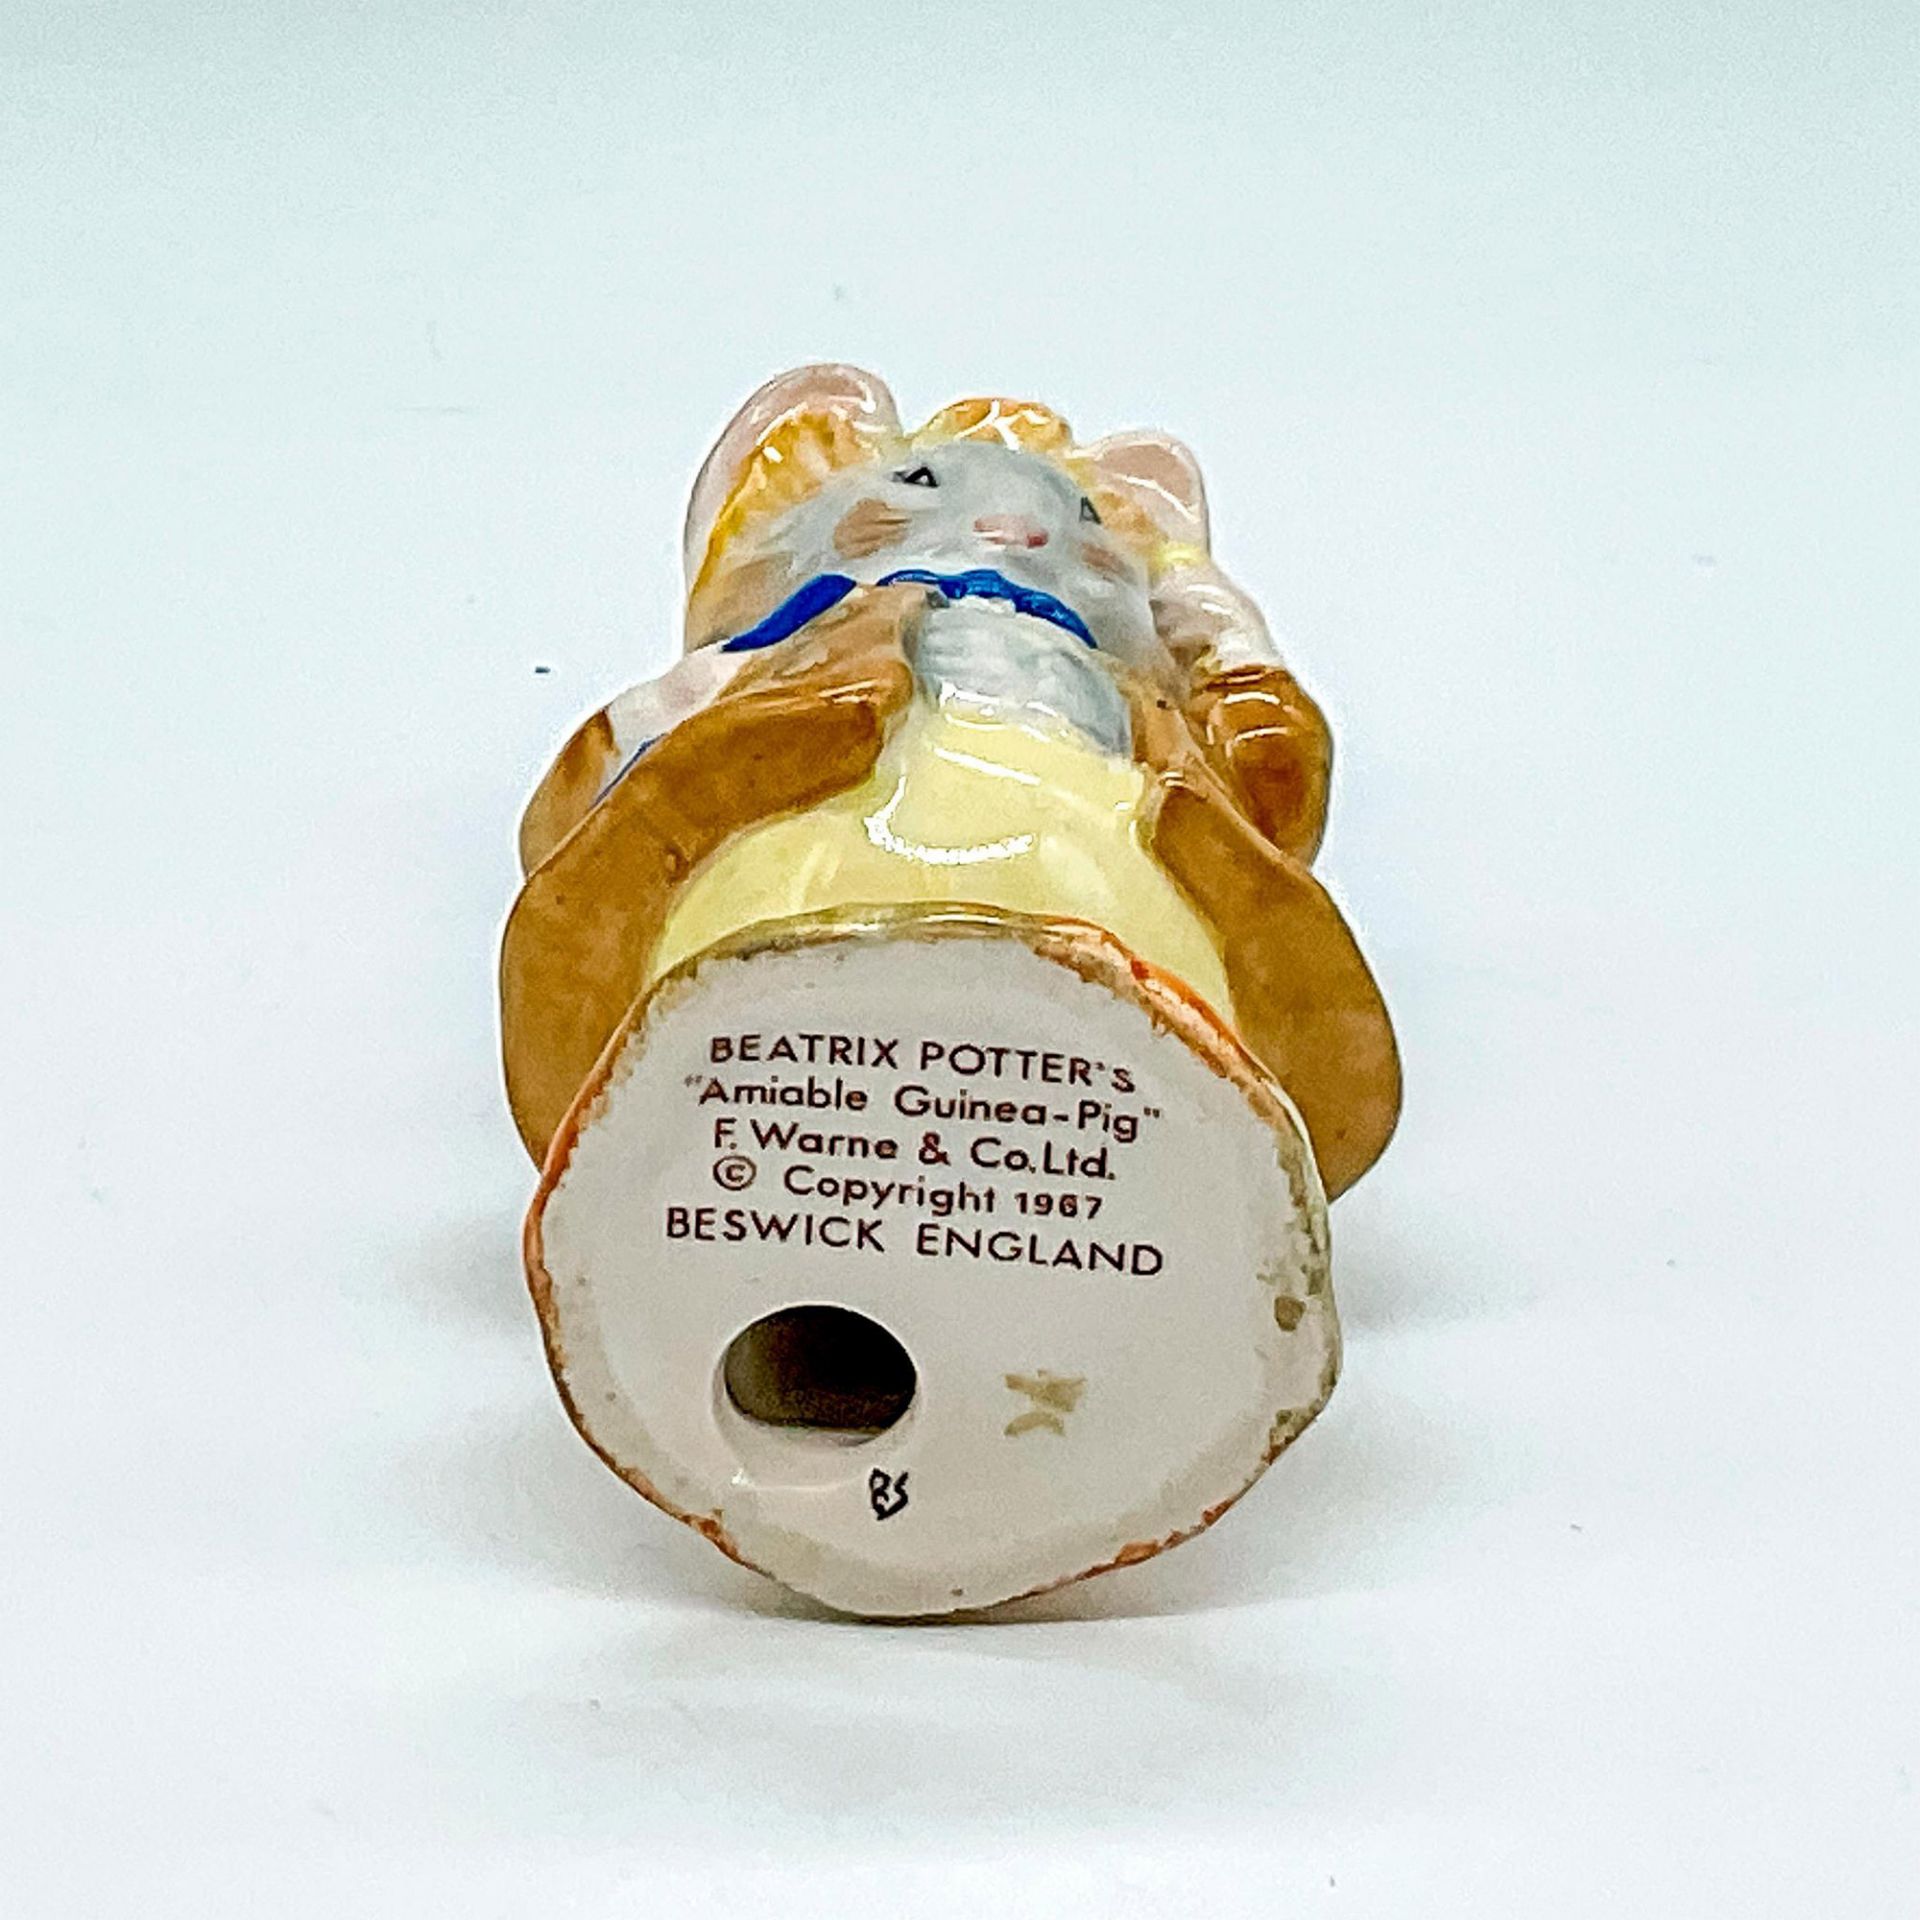 Beswick Beatrix Potter's Figurine, Amiable Guinea-Pig - Image 3 of 3